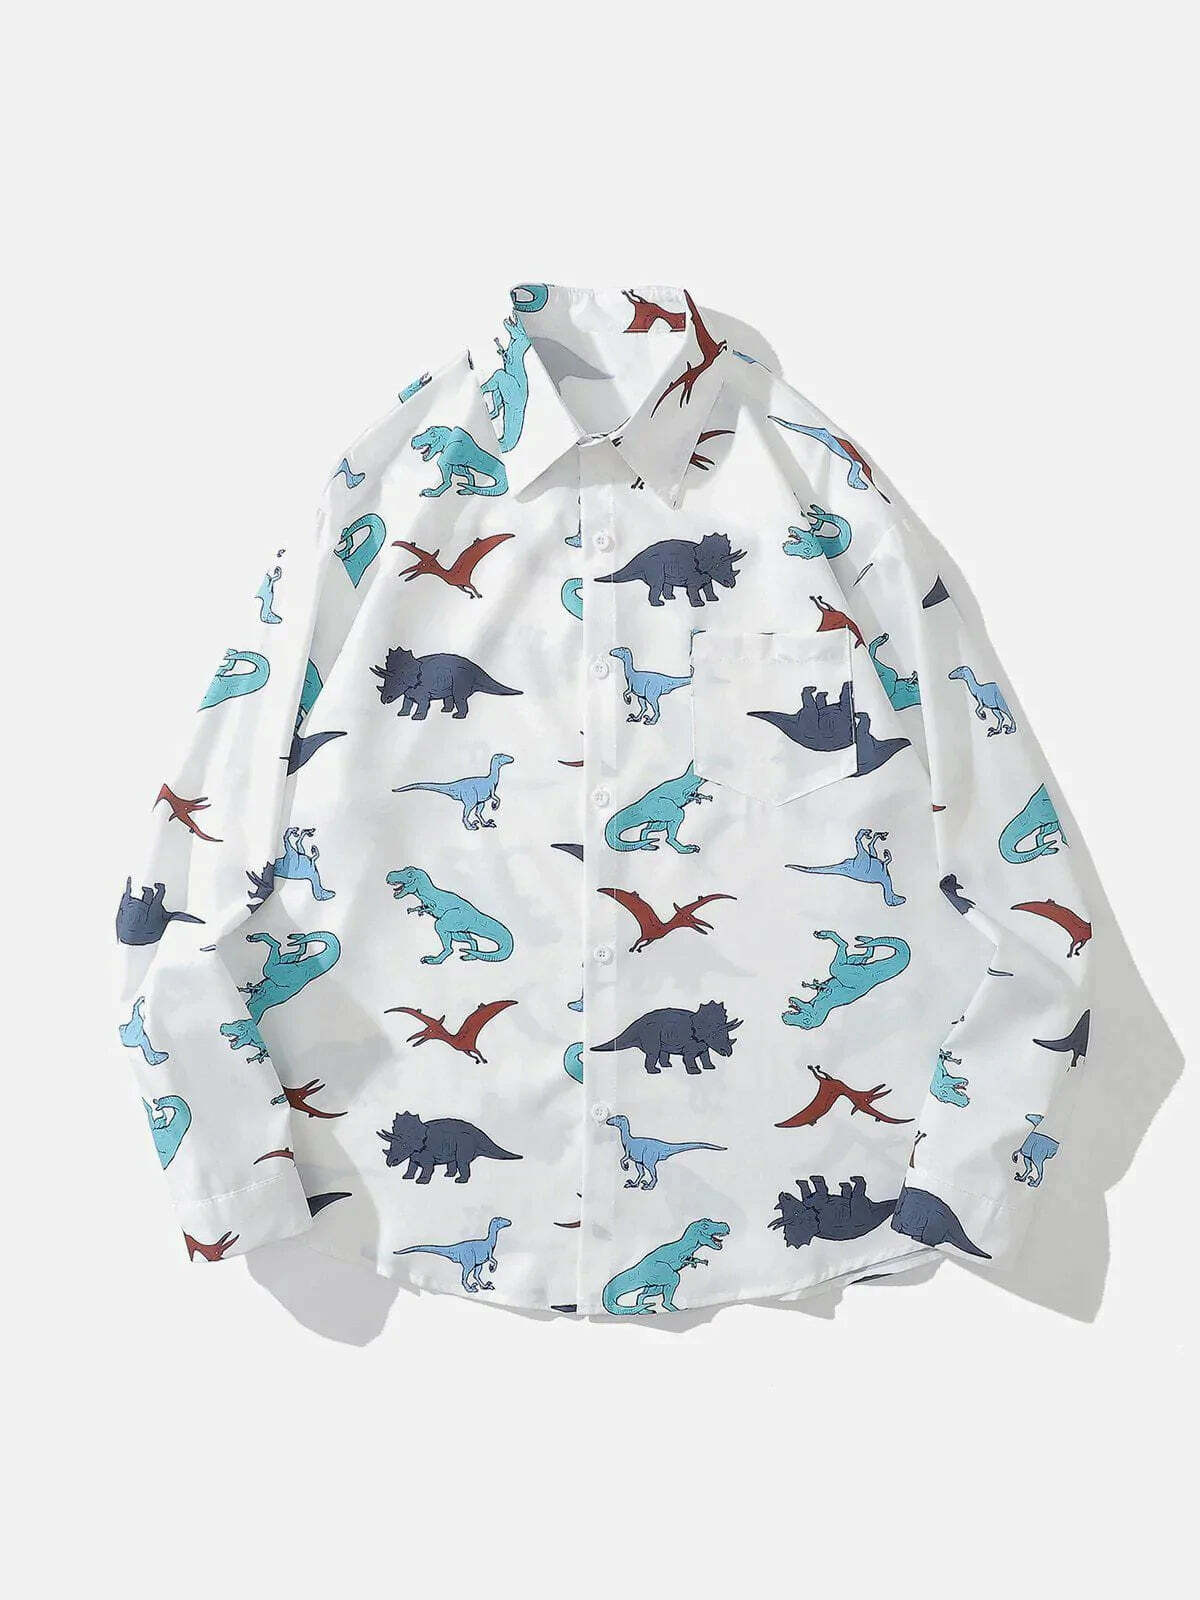 dinosaur print shirt edgy & vibrant streetwear 2062